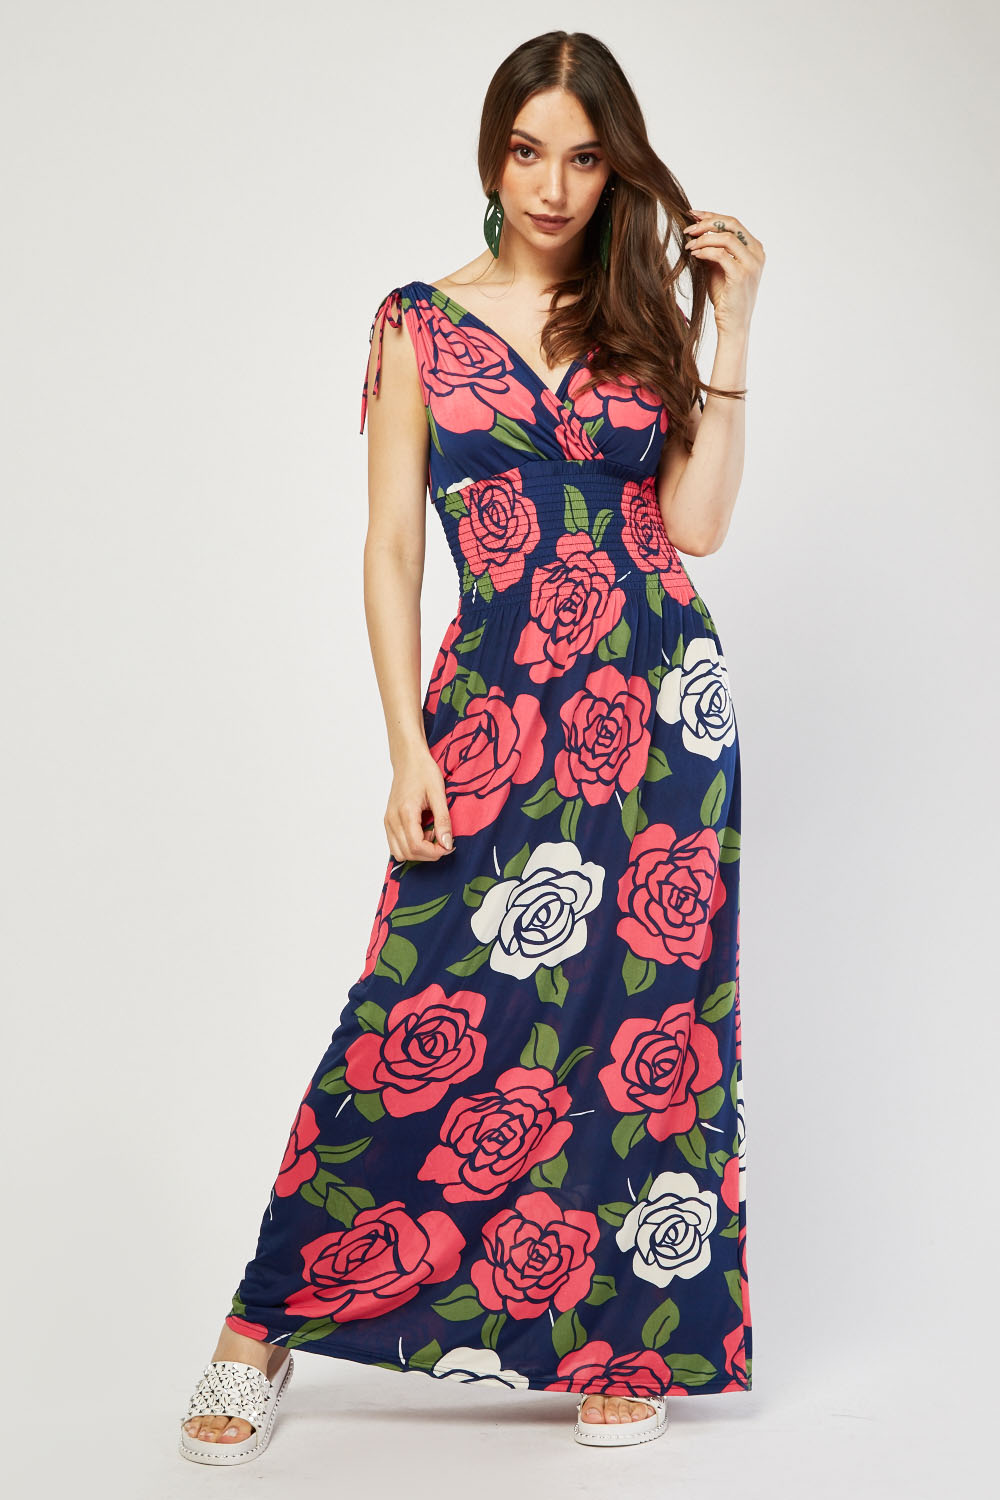 Large Rose Print Maxi Dress - Just $7